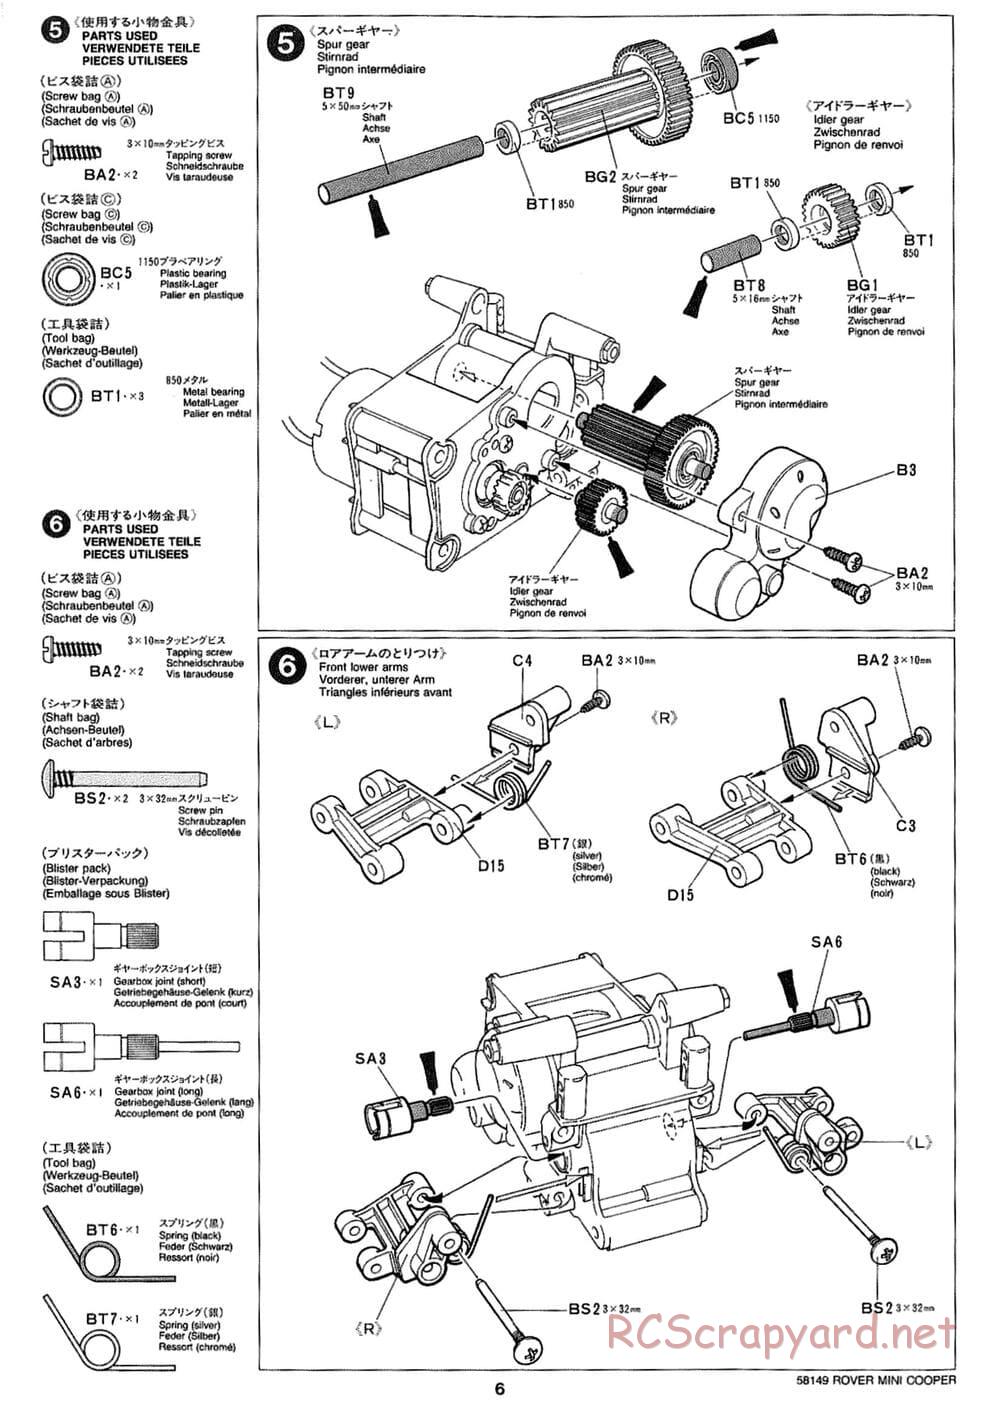 Tamiya - Rover Mini Cooper - M01 Chassis - Manual - Page 6